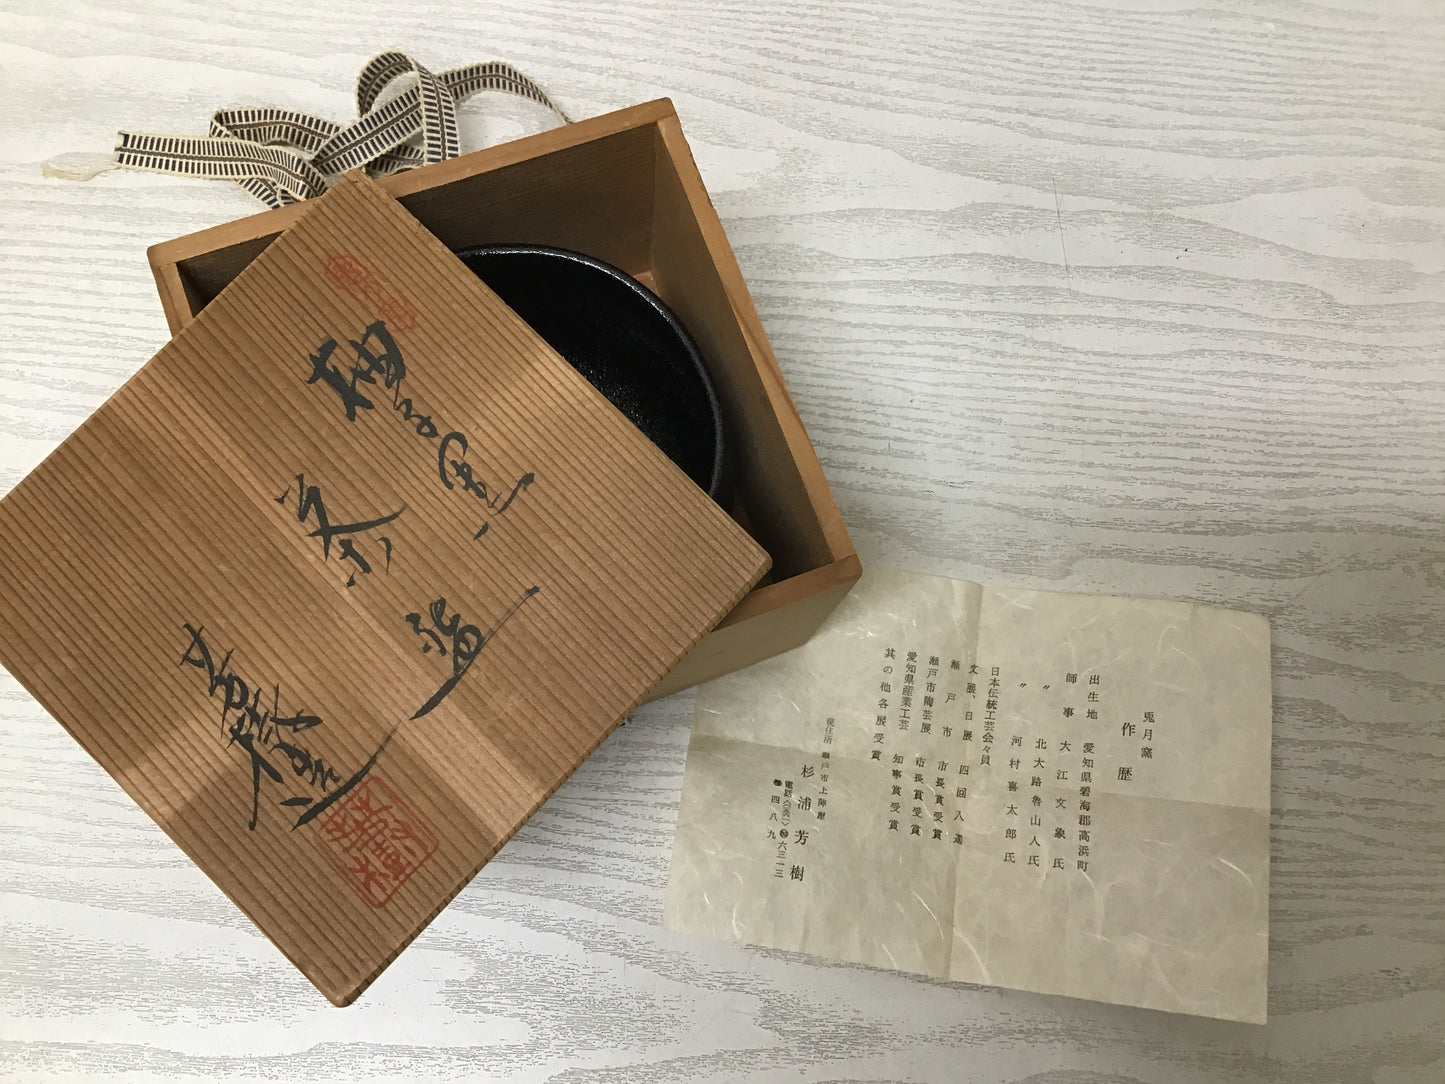 Y2842 CHAWAN Seto-ware Black signed box Japan tea ceremony bowl antique vintage